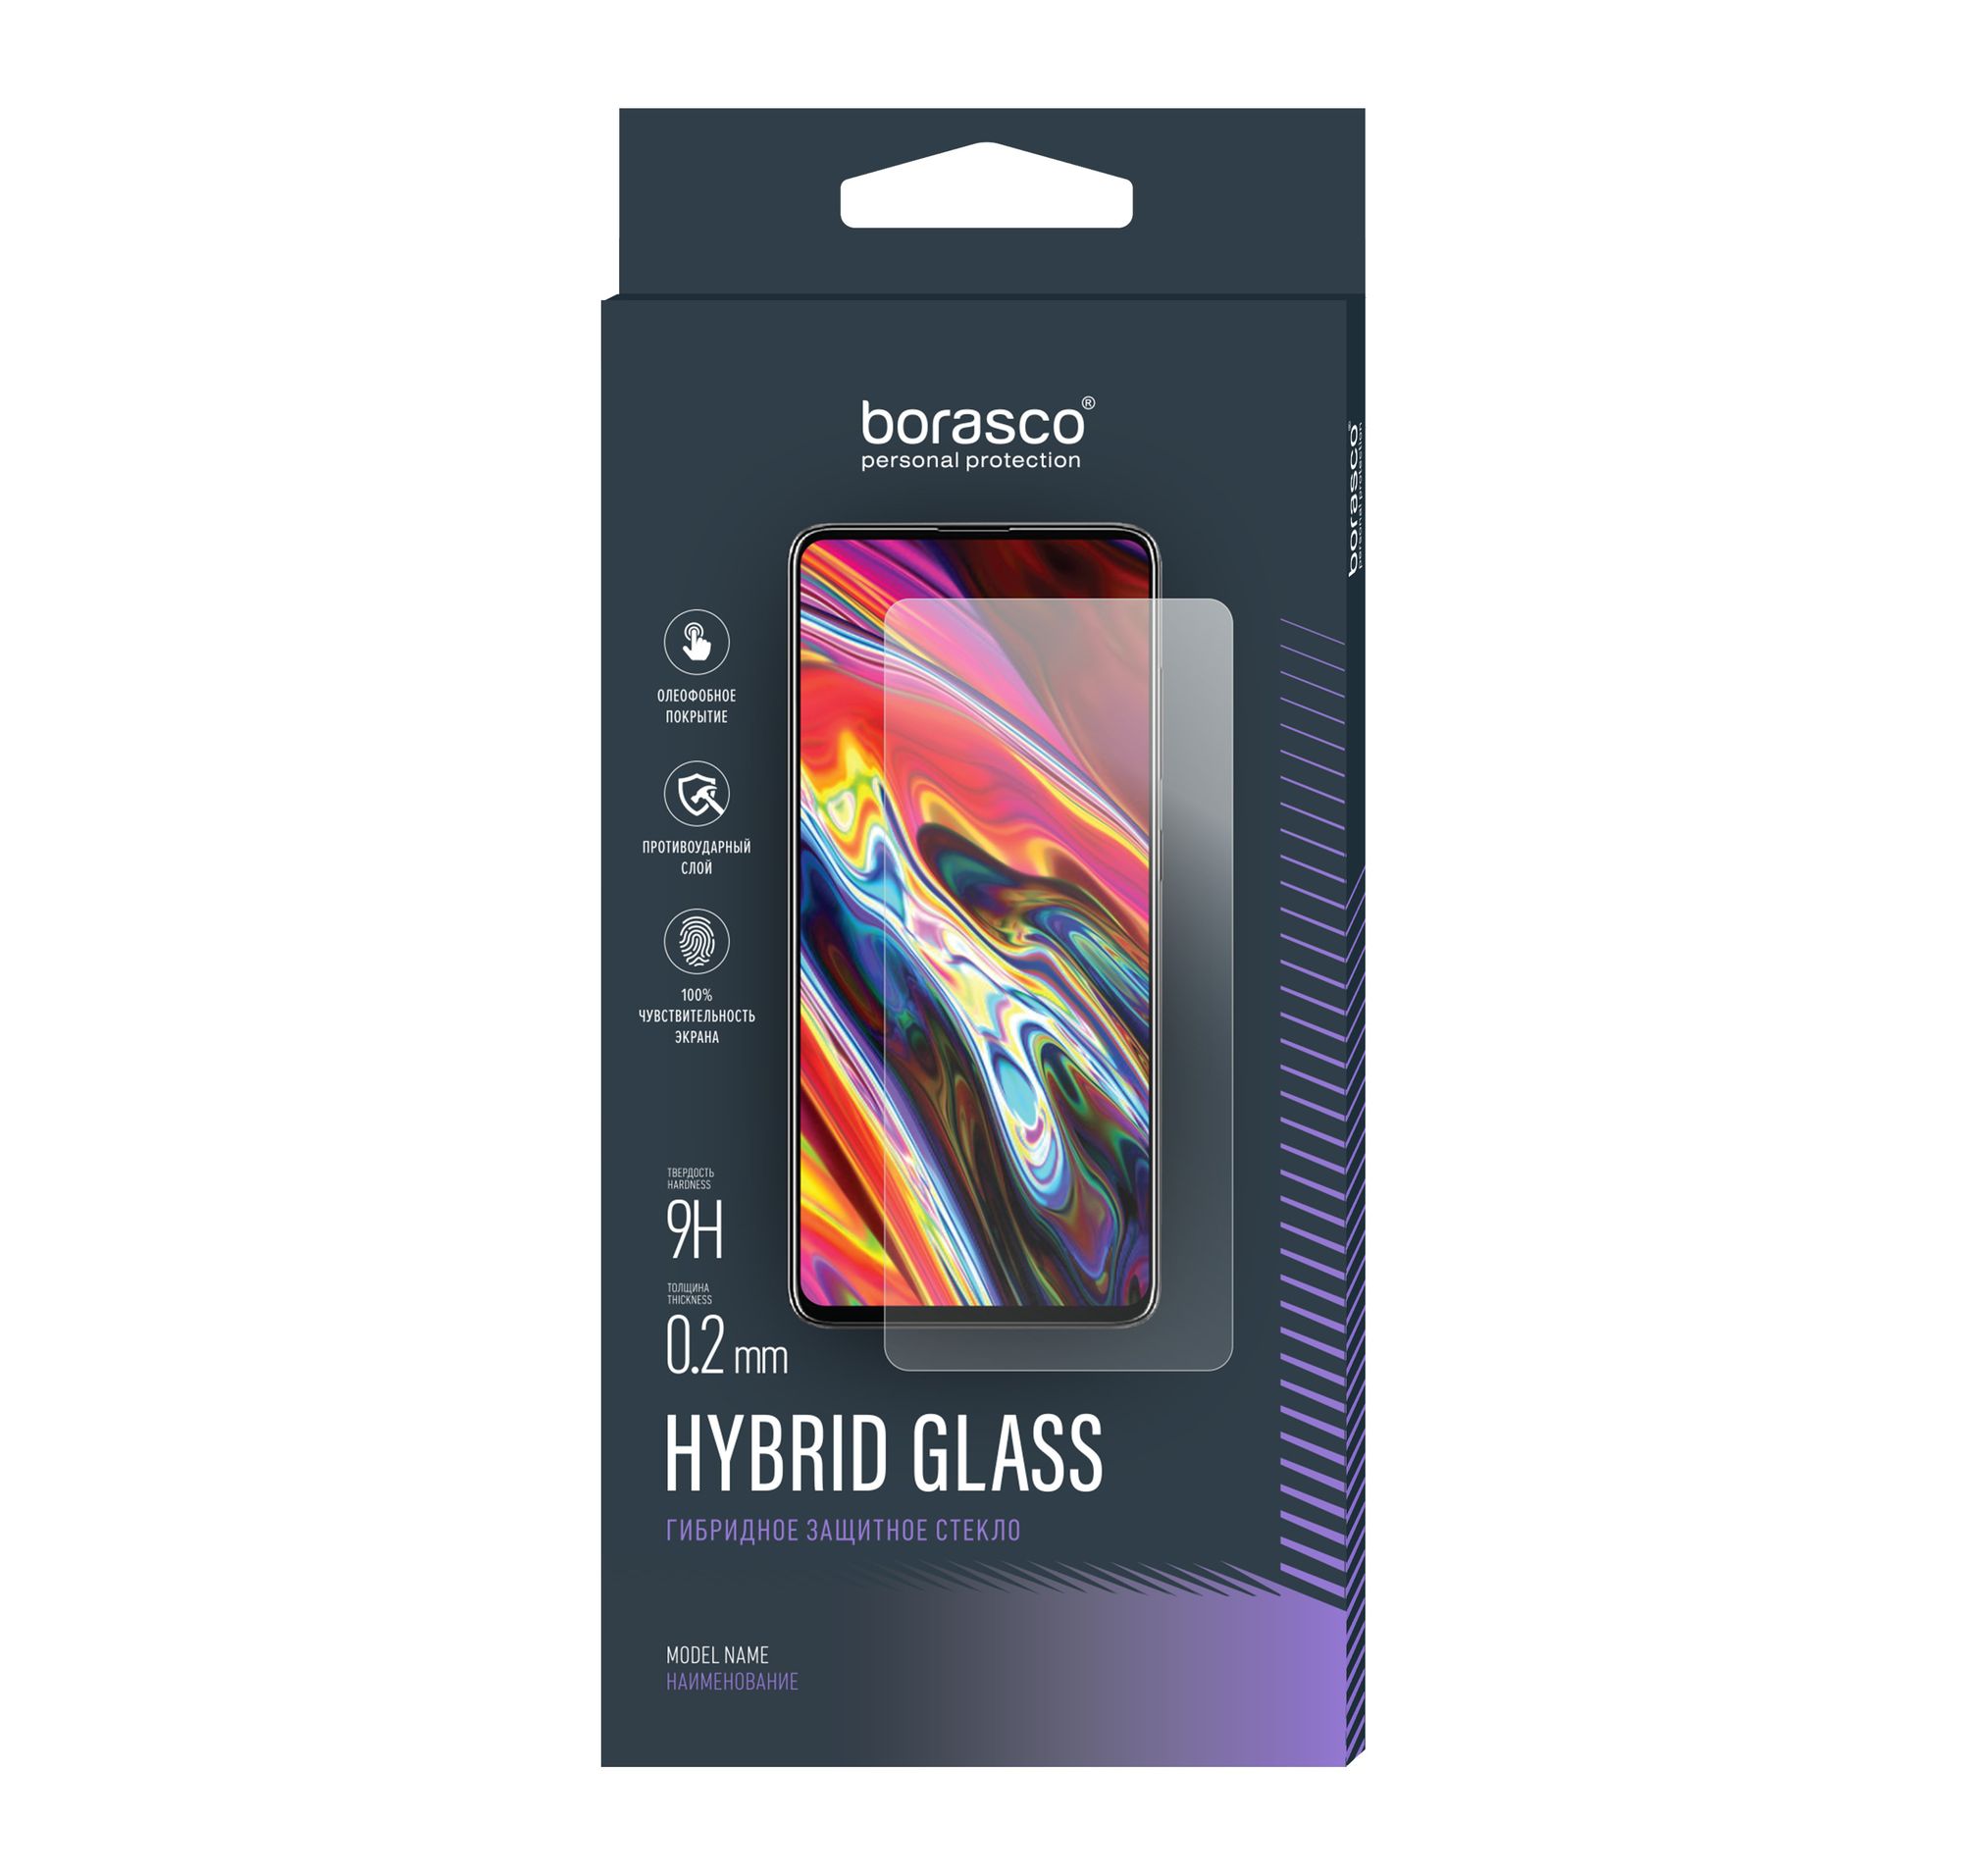 Стекло защитное Hybrid Glass VSP 0,26 мм для Sony Xperia XZ Premium Dual противоударное стекло для sony d2302 xperia m2 dual d2303 d2305 xperia m2